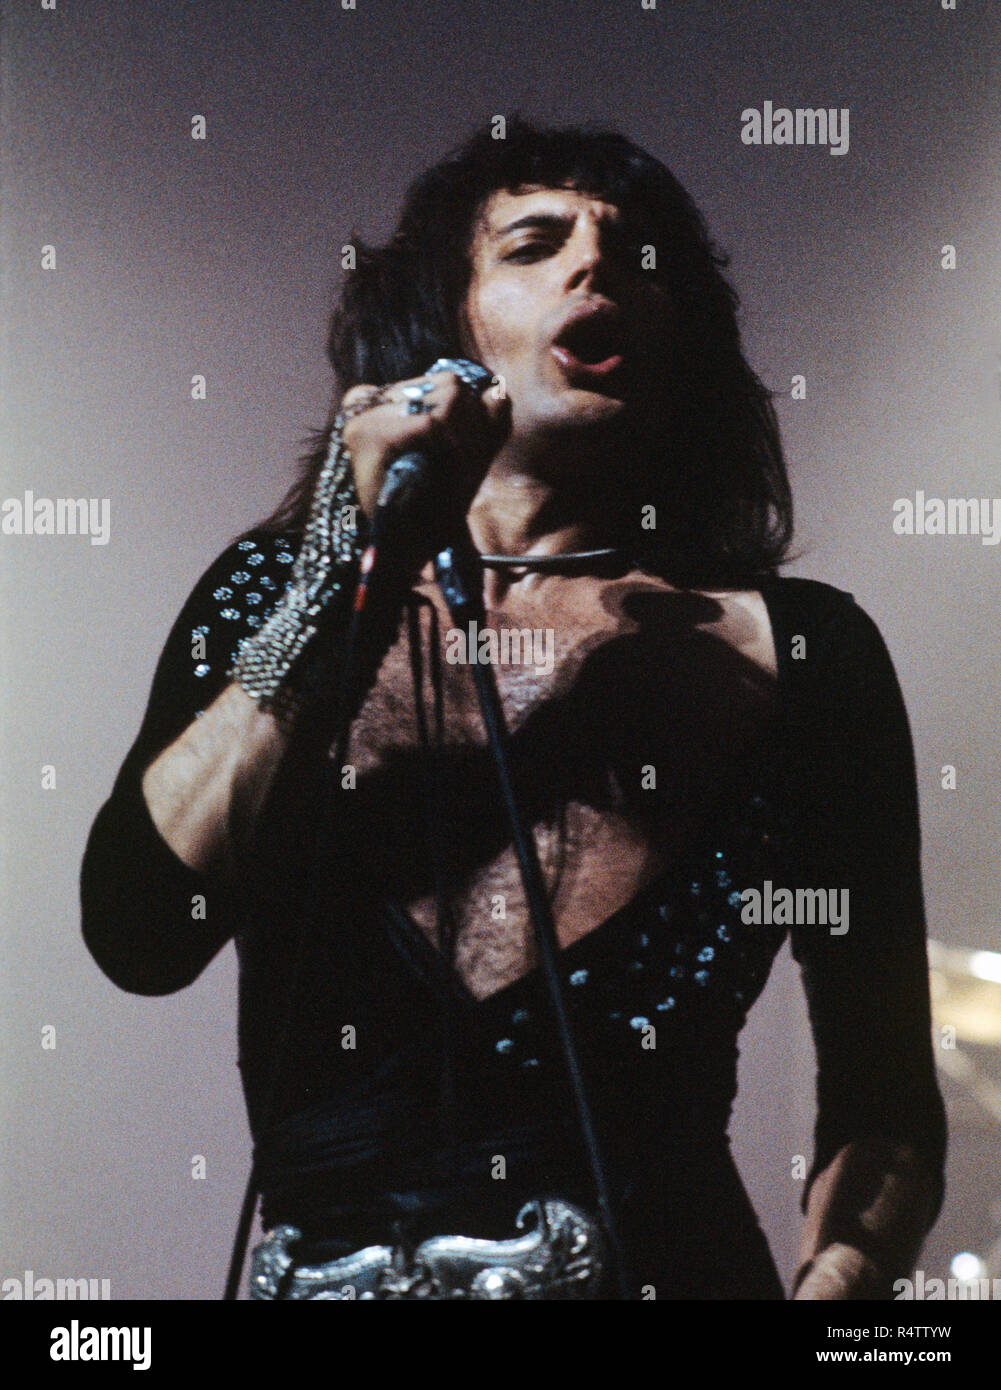 Paesi Bassi - gennaio 29: AHOY Foto di Queen Freddie Mercury John Deacon & Brian può eseguire sul palco (foto Gijsbert Hanekroot) *** Caption locale *** Regina Foto Stock